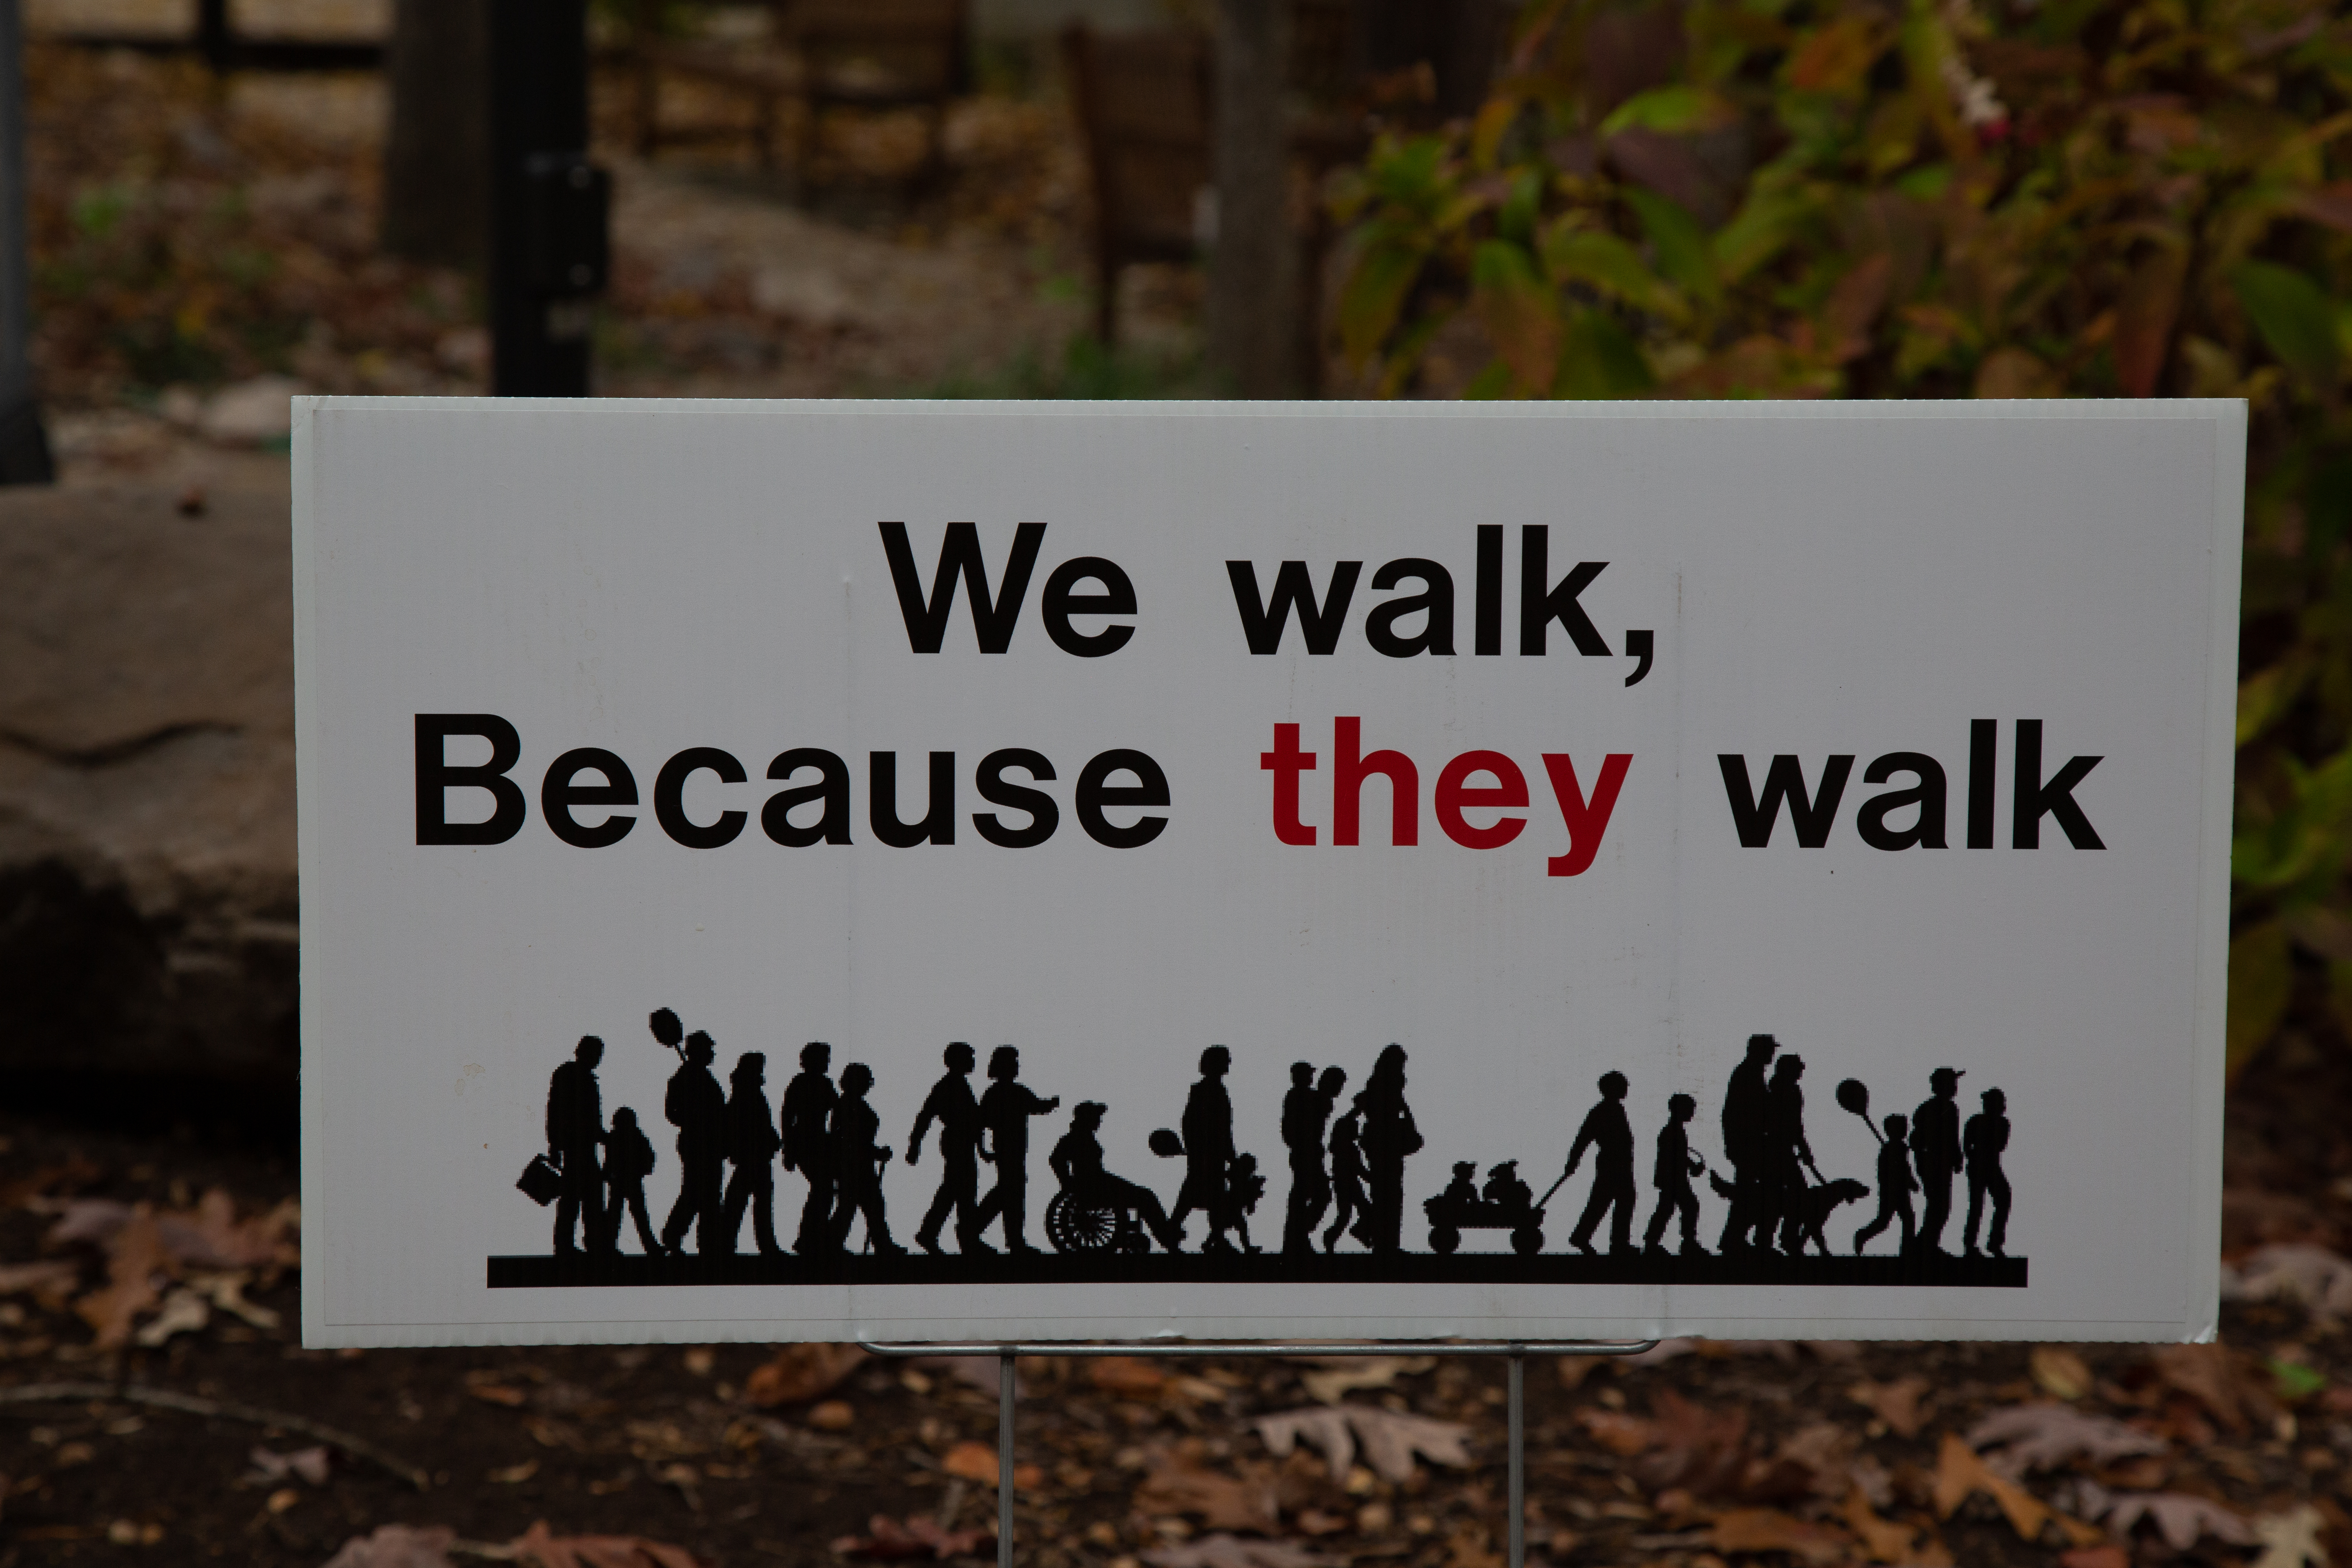 We walk, because they walk.